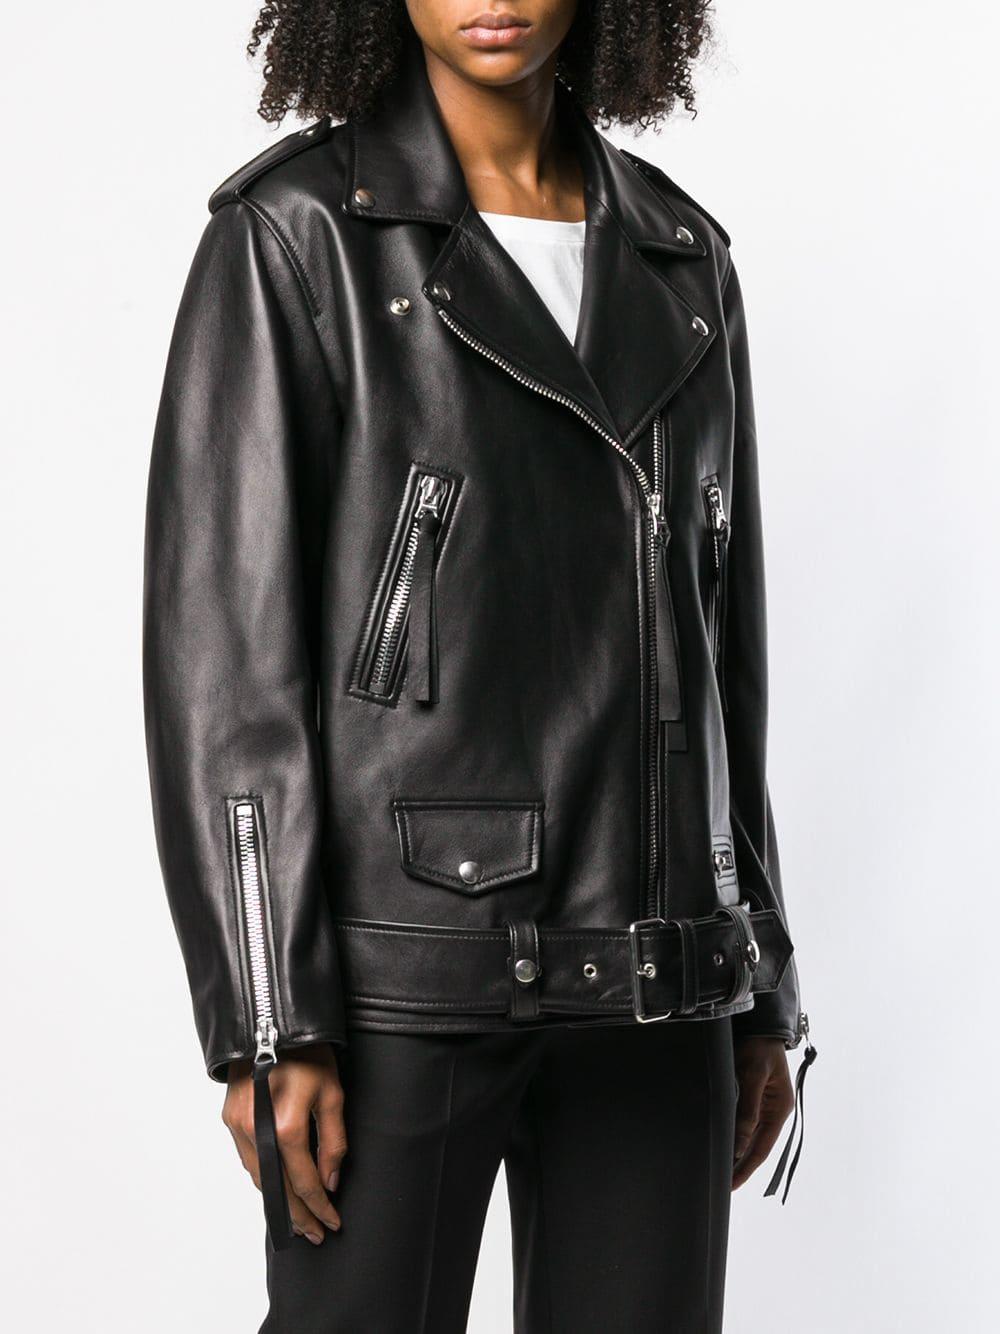 Acne Studios Leather New Myrtle Oversized Jacket in Black - Lyst